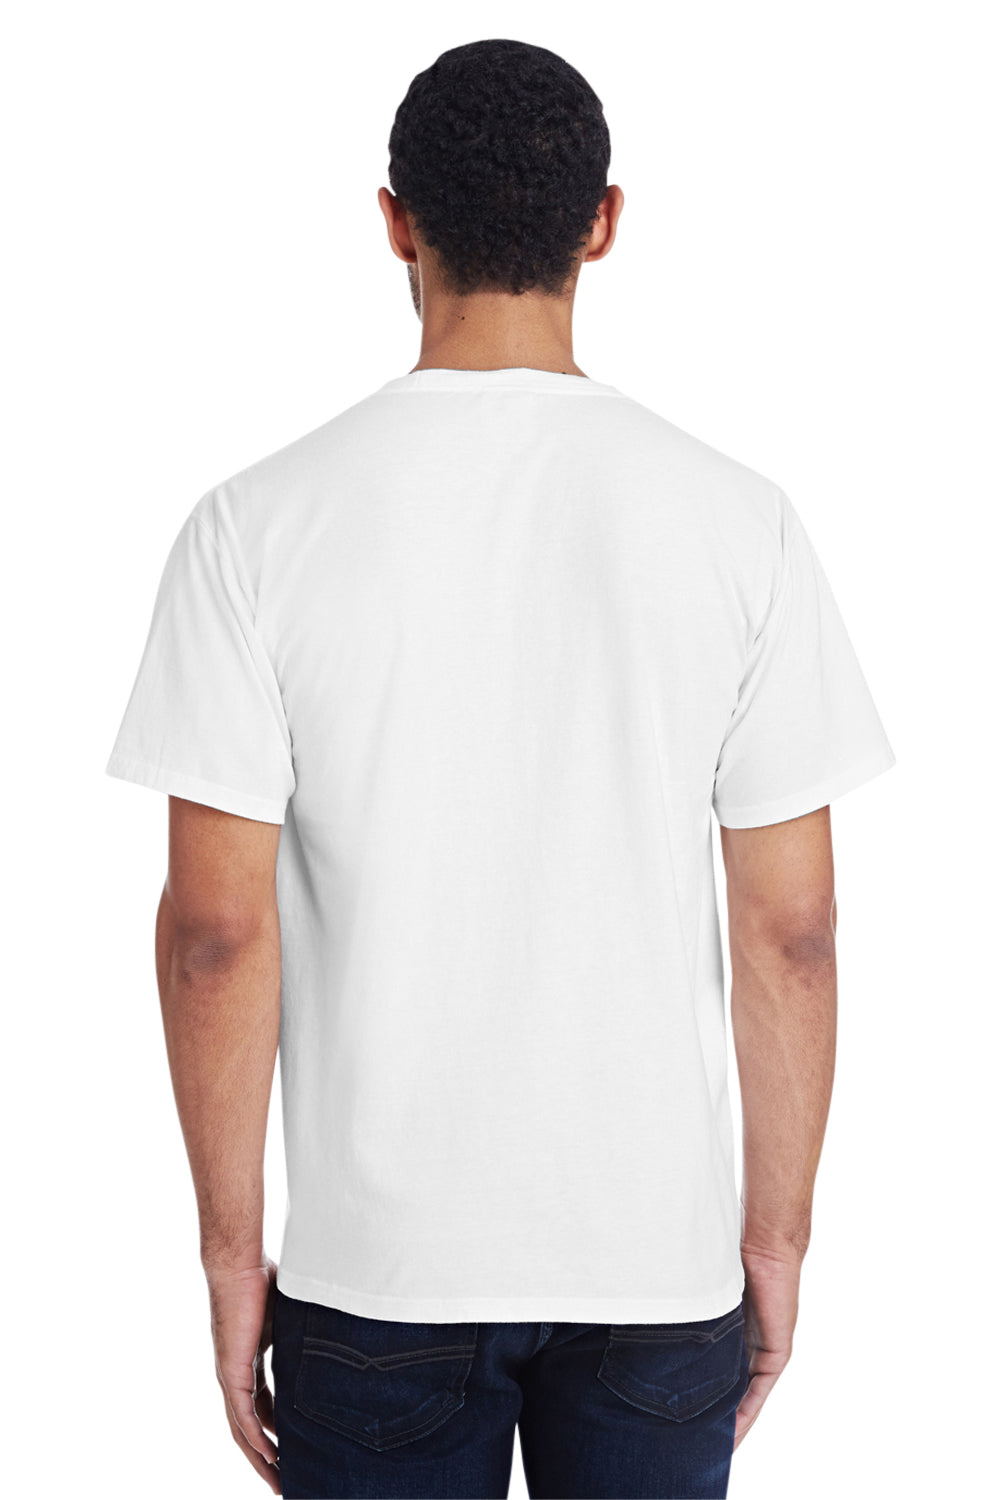 ComfortWash By Hanes GDH150 Mens Short Sleeve Crewneck T-Shirt w/ Pocket White Back